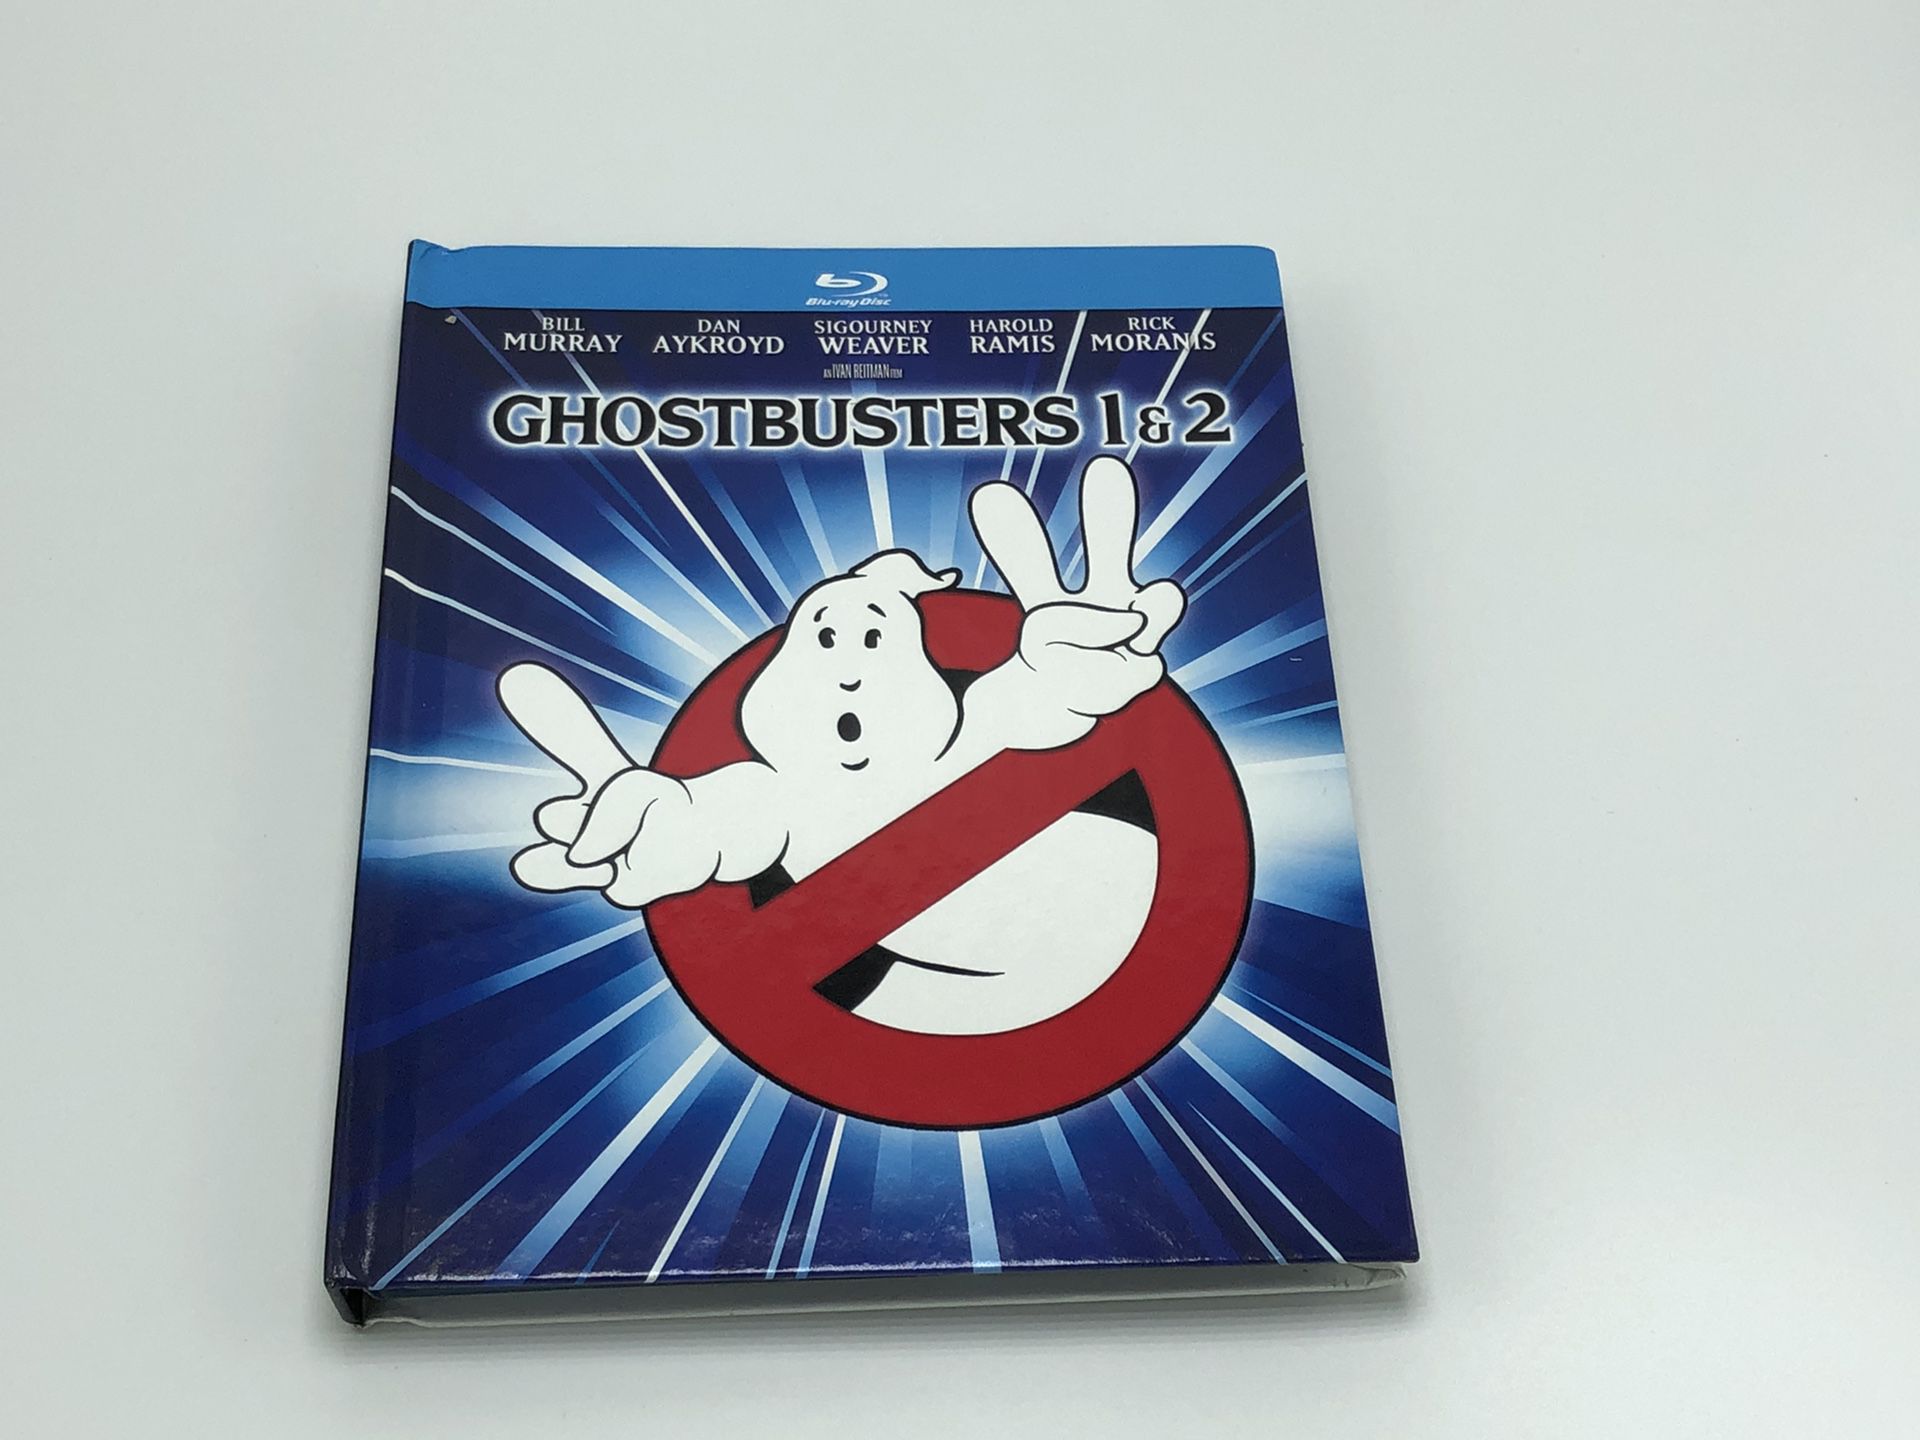 Ghostbusters 1 & 2 blu-ray